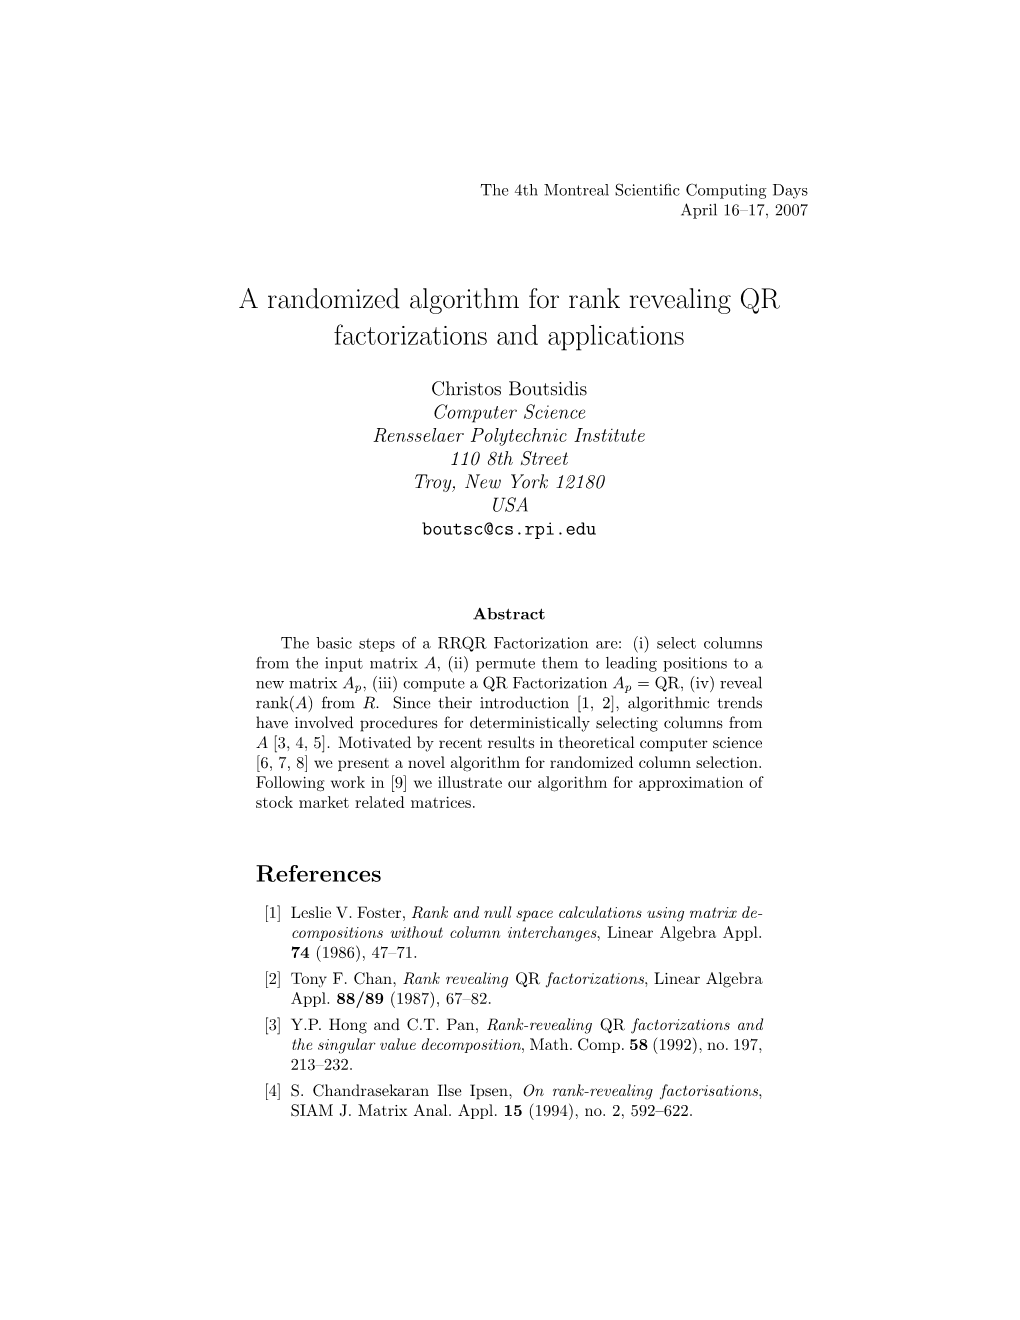 A Randomized Algorithm for Rank Revealing QR Factorizations and Applications